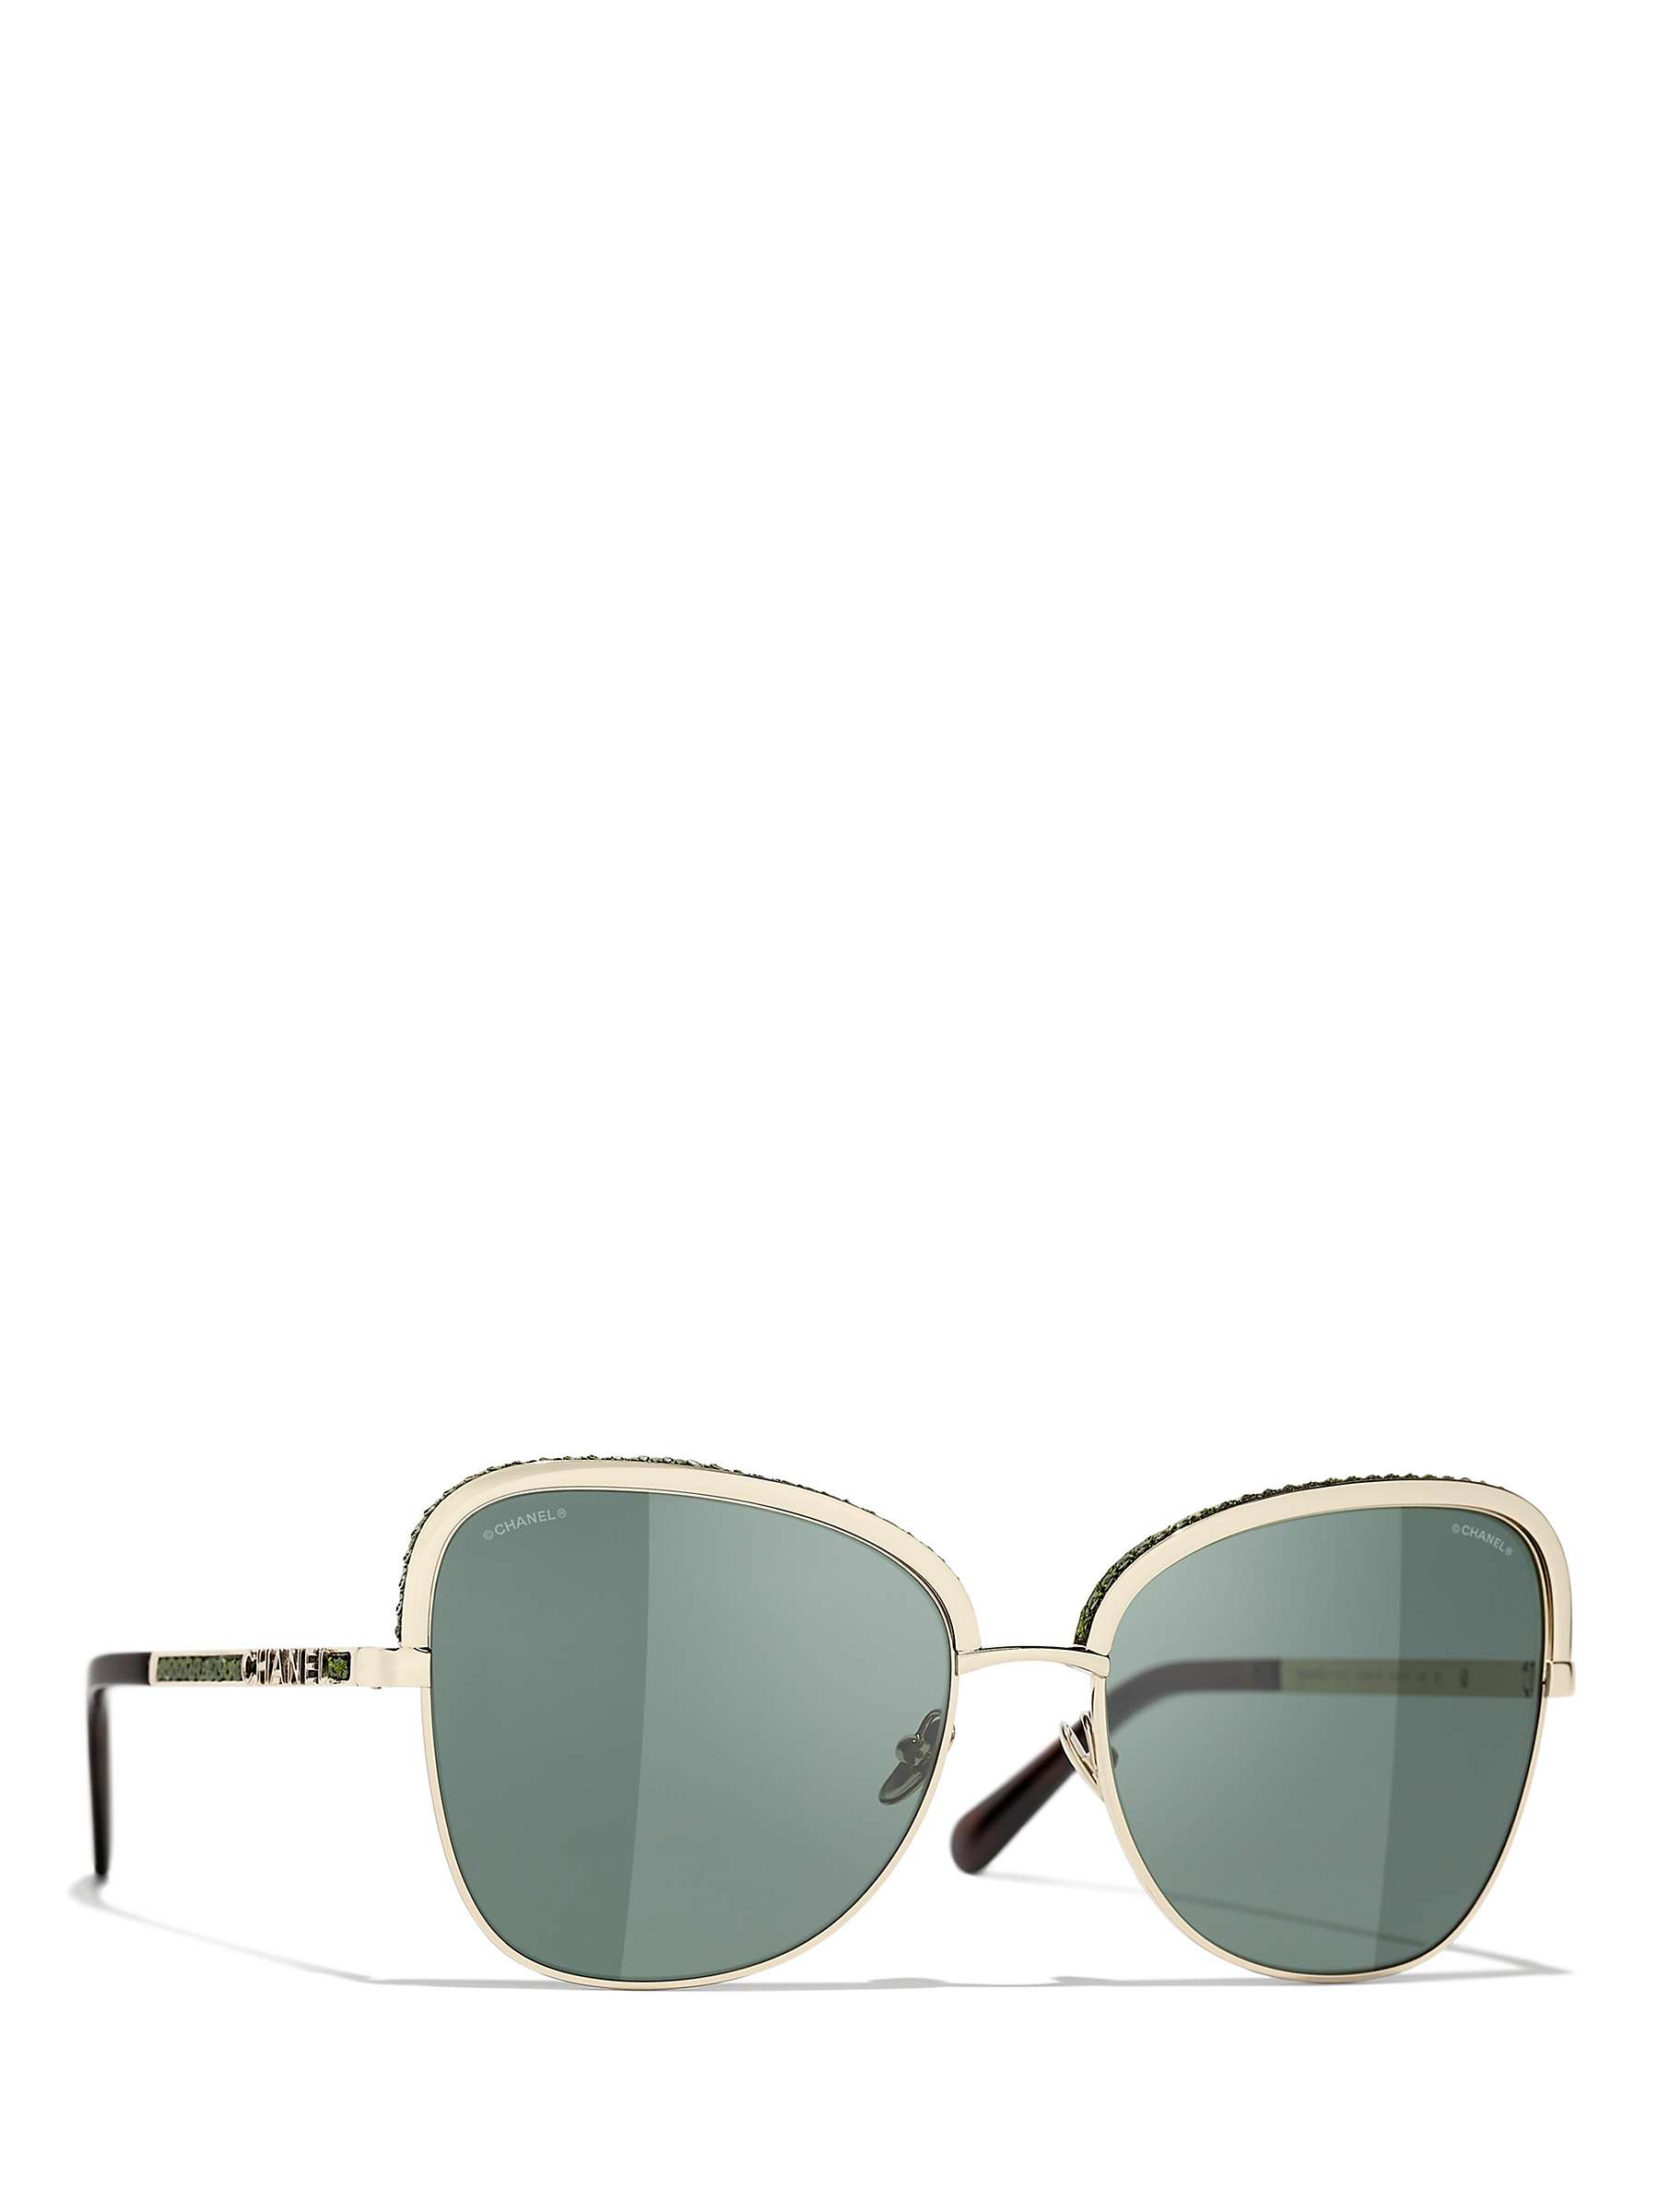 Buy CHANEL Irregular Sunglasses CH4270 Shiny Gold/Green Online at johnlewis.com